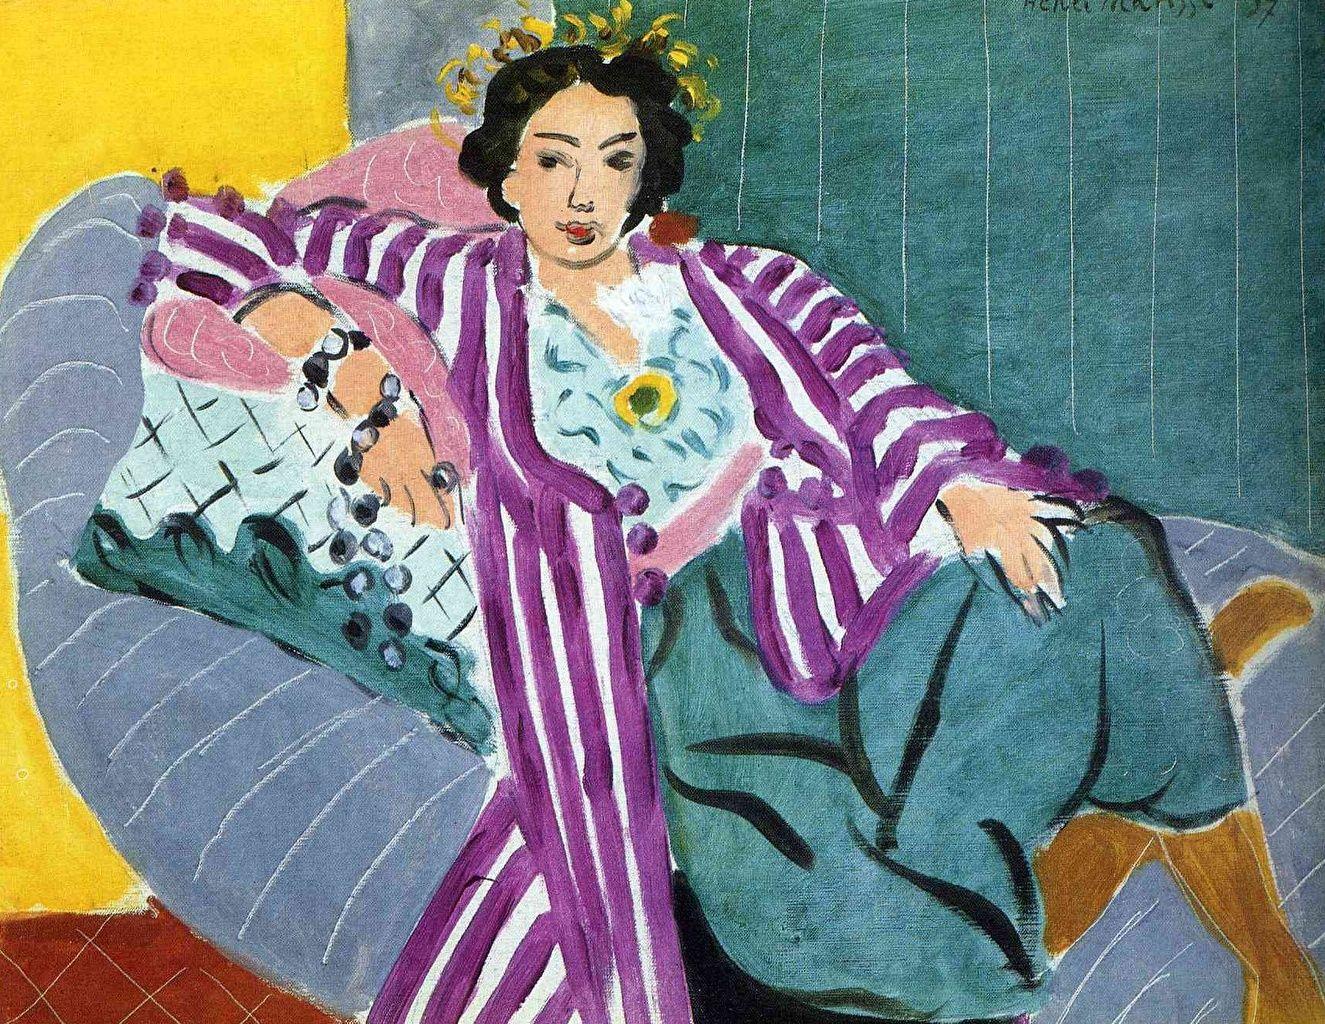 Henri Matisse wallpaper picture download